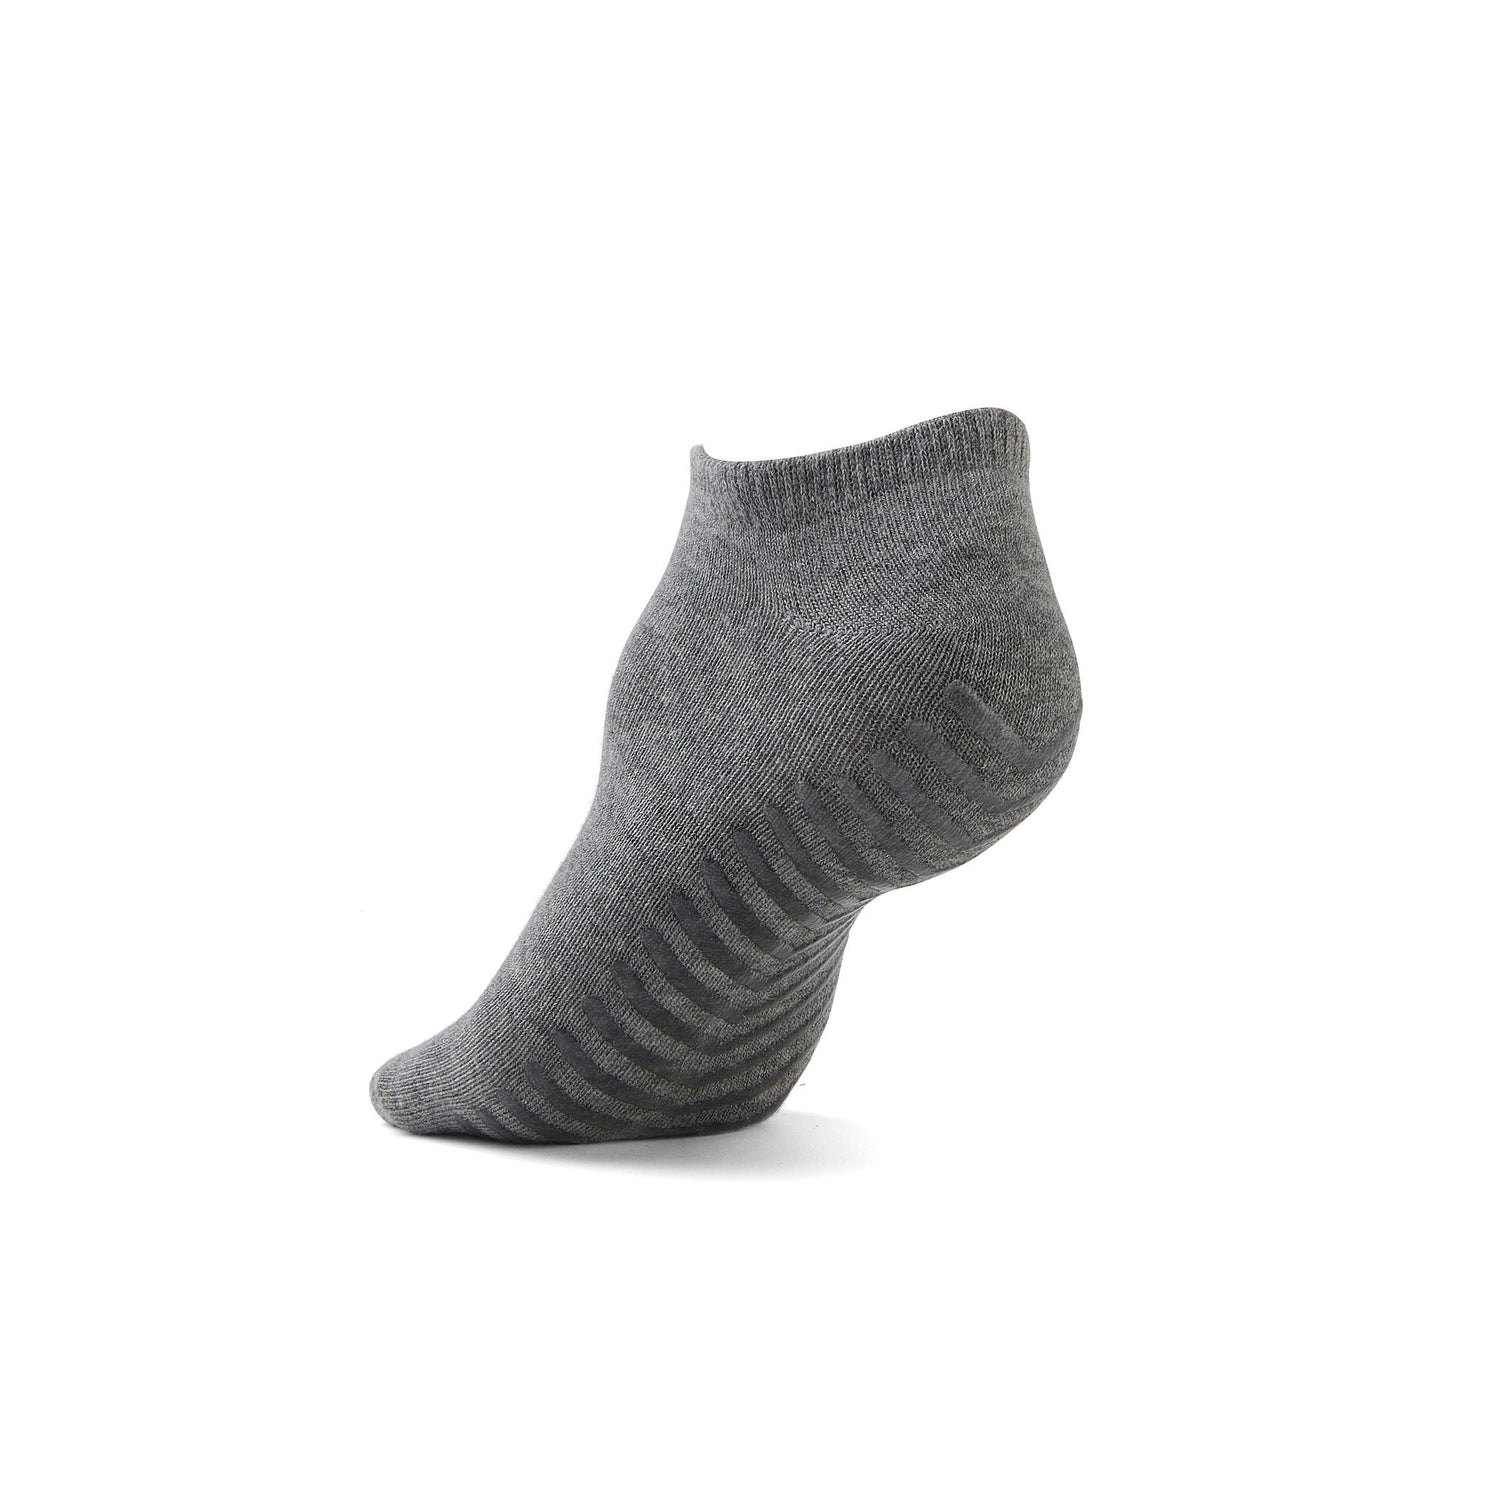 Light grey anti slip ankle socks made of ultra soft cotton with sticky grips.